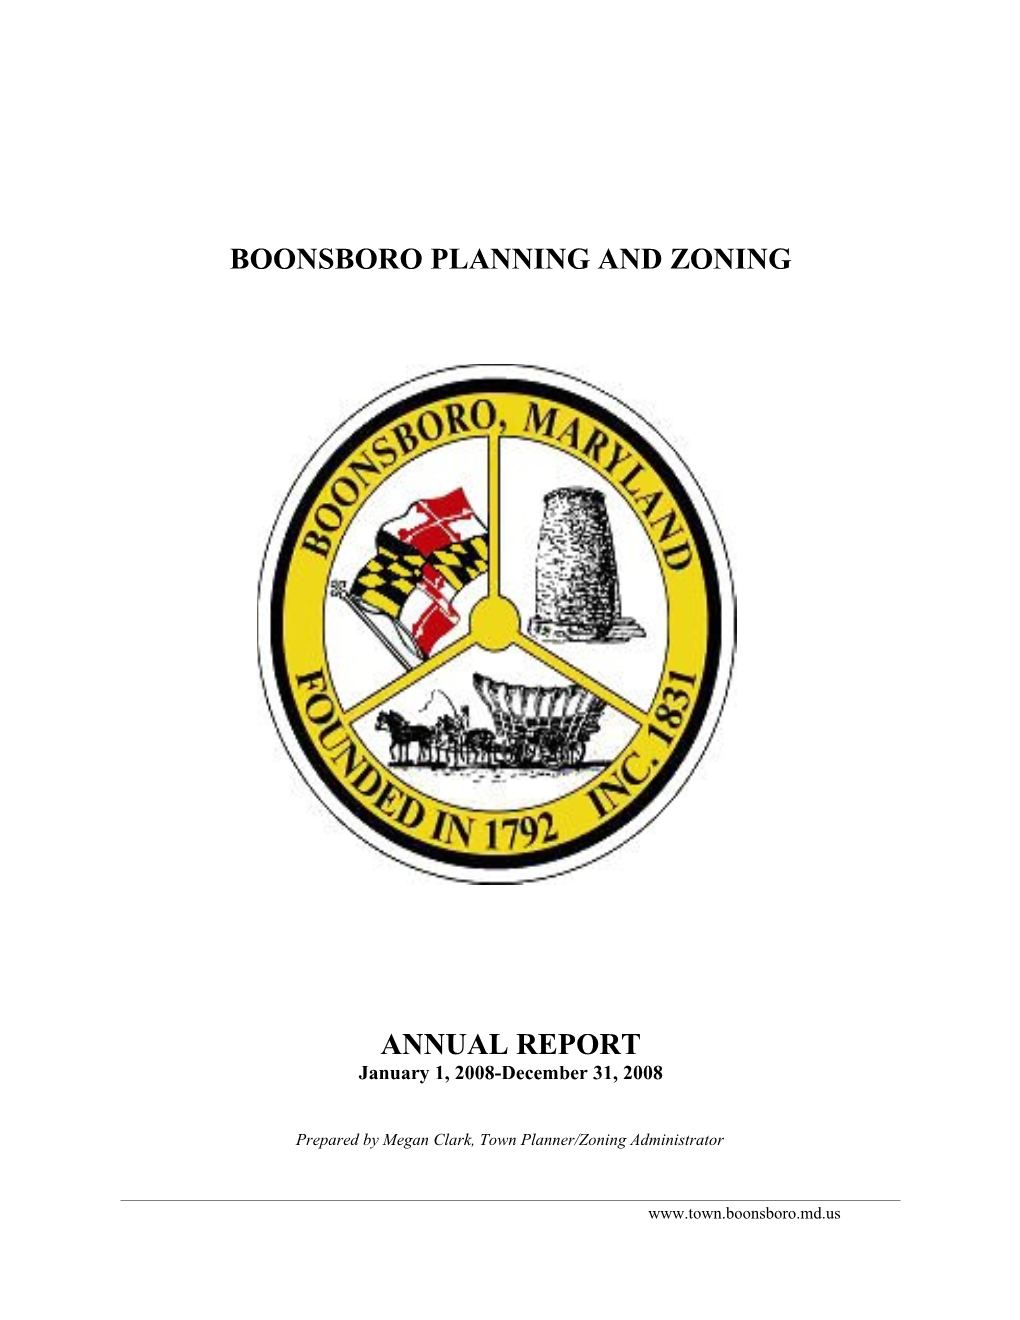 Boonsboro Planning and Zoning